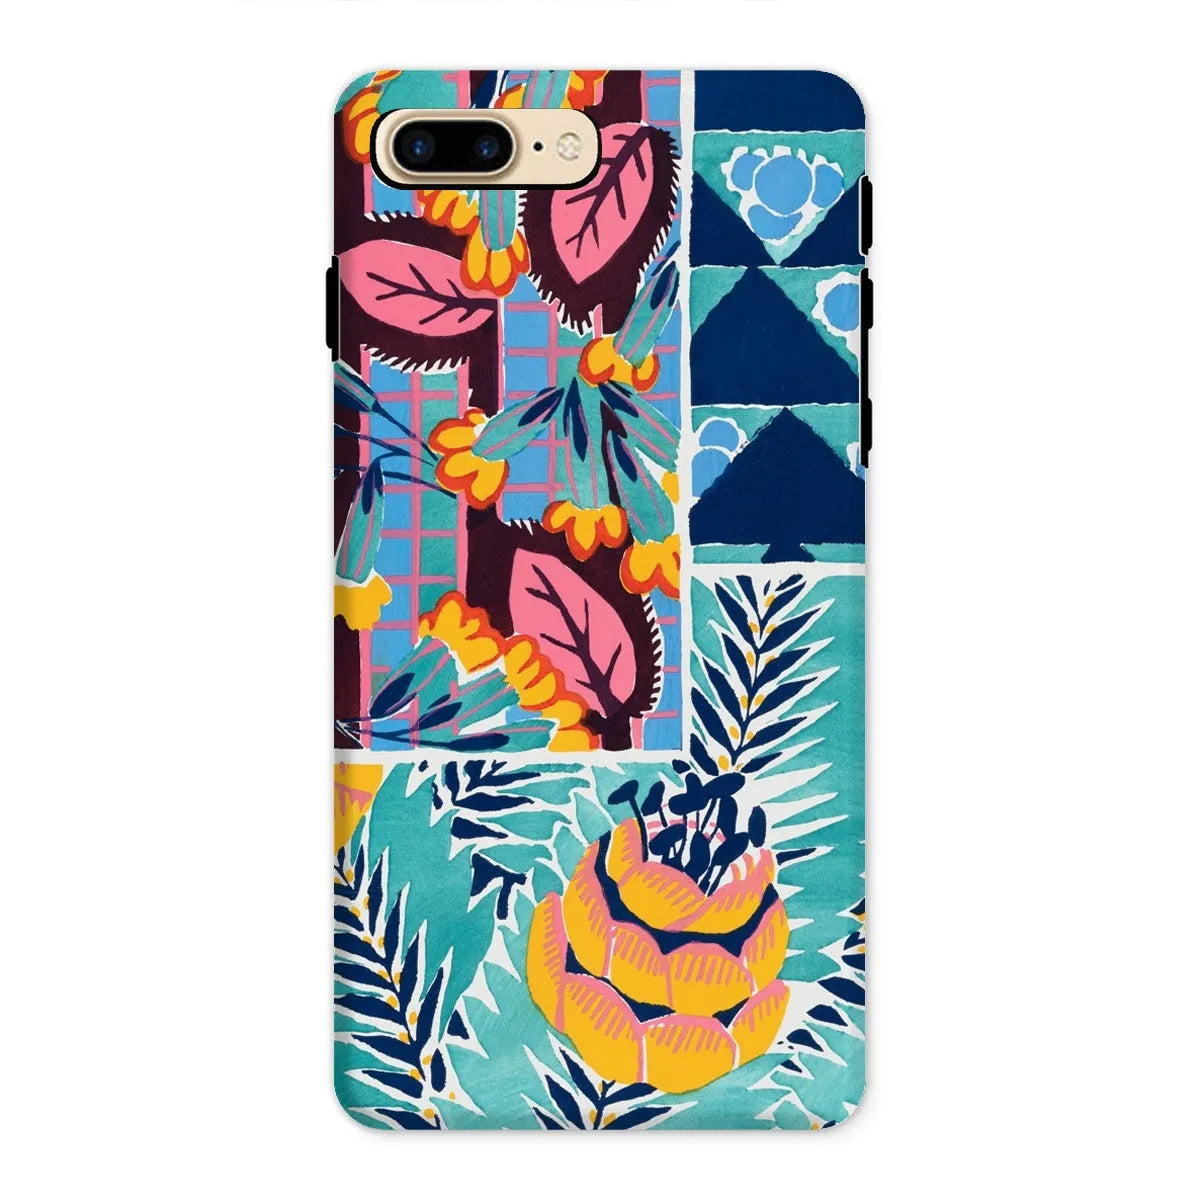 Fabric & Rugs - Pochoir Patterns Phone Case - E. A. Séguy - Iphone 8 Plus / Matte - Mobile Phone Cases - Aesthetic Art